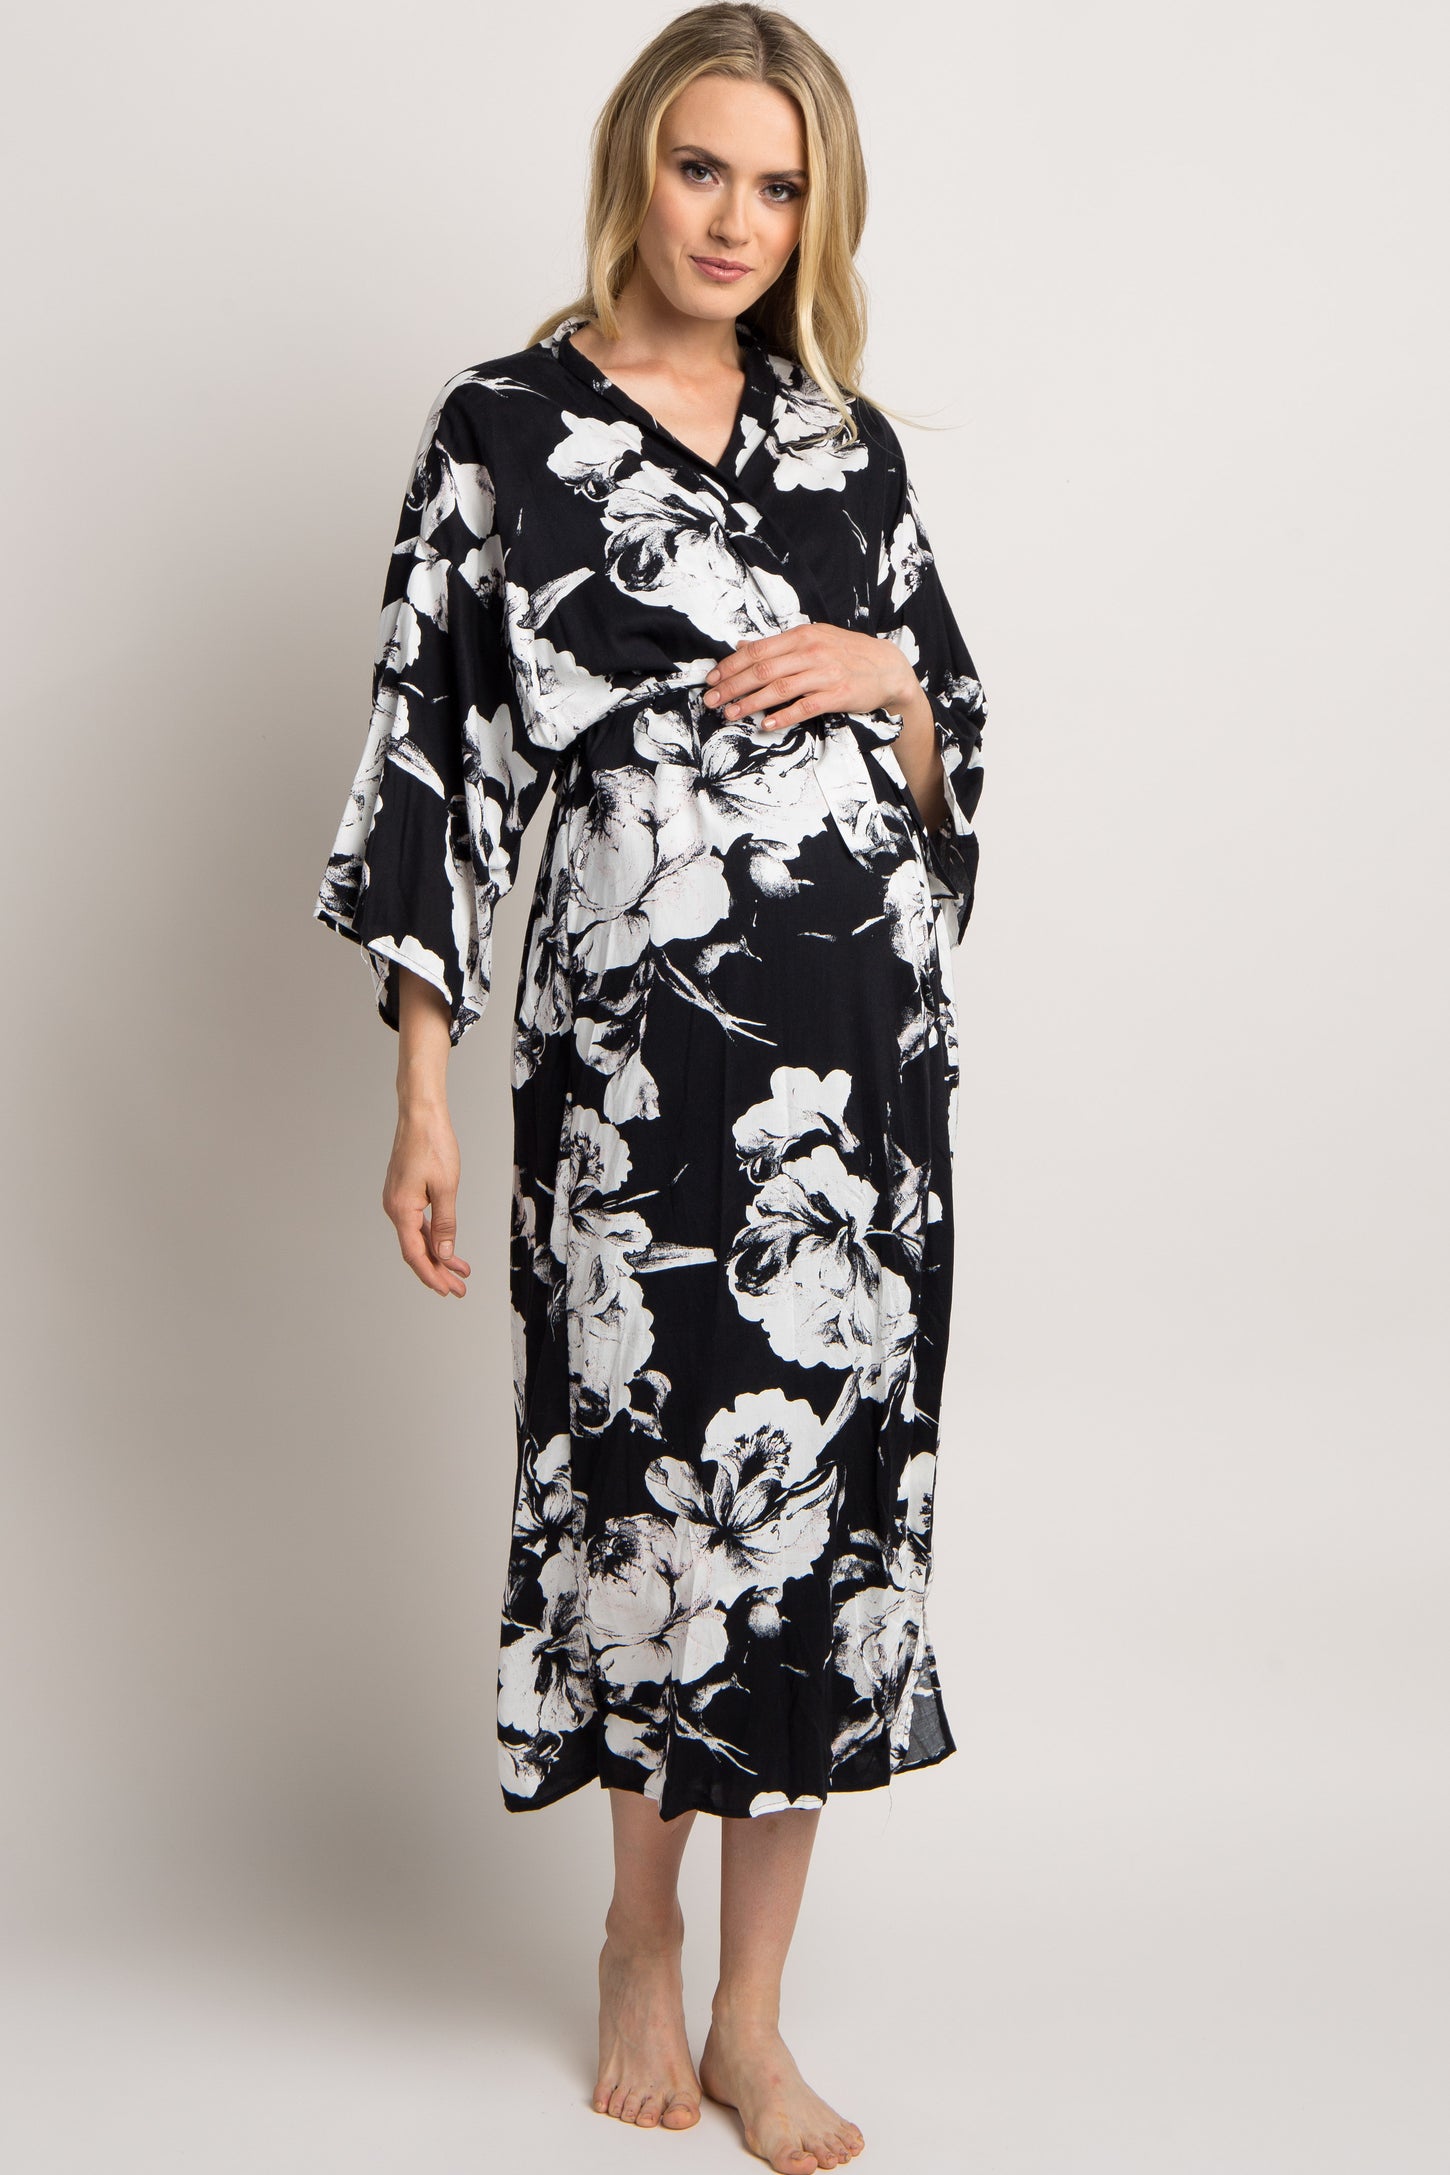 PinkBlush Black Floral Delivery/Nursing Long Maternity Robe